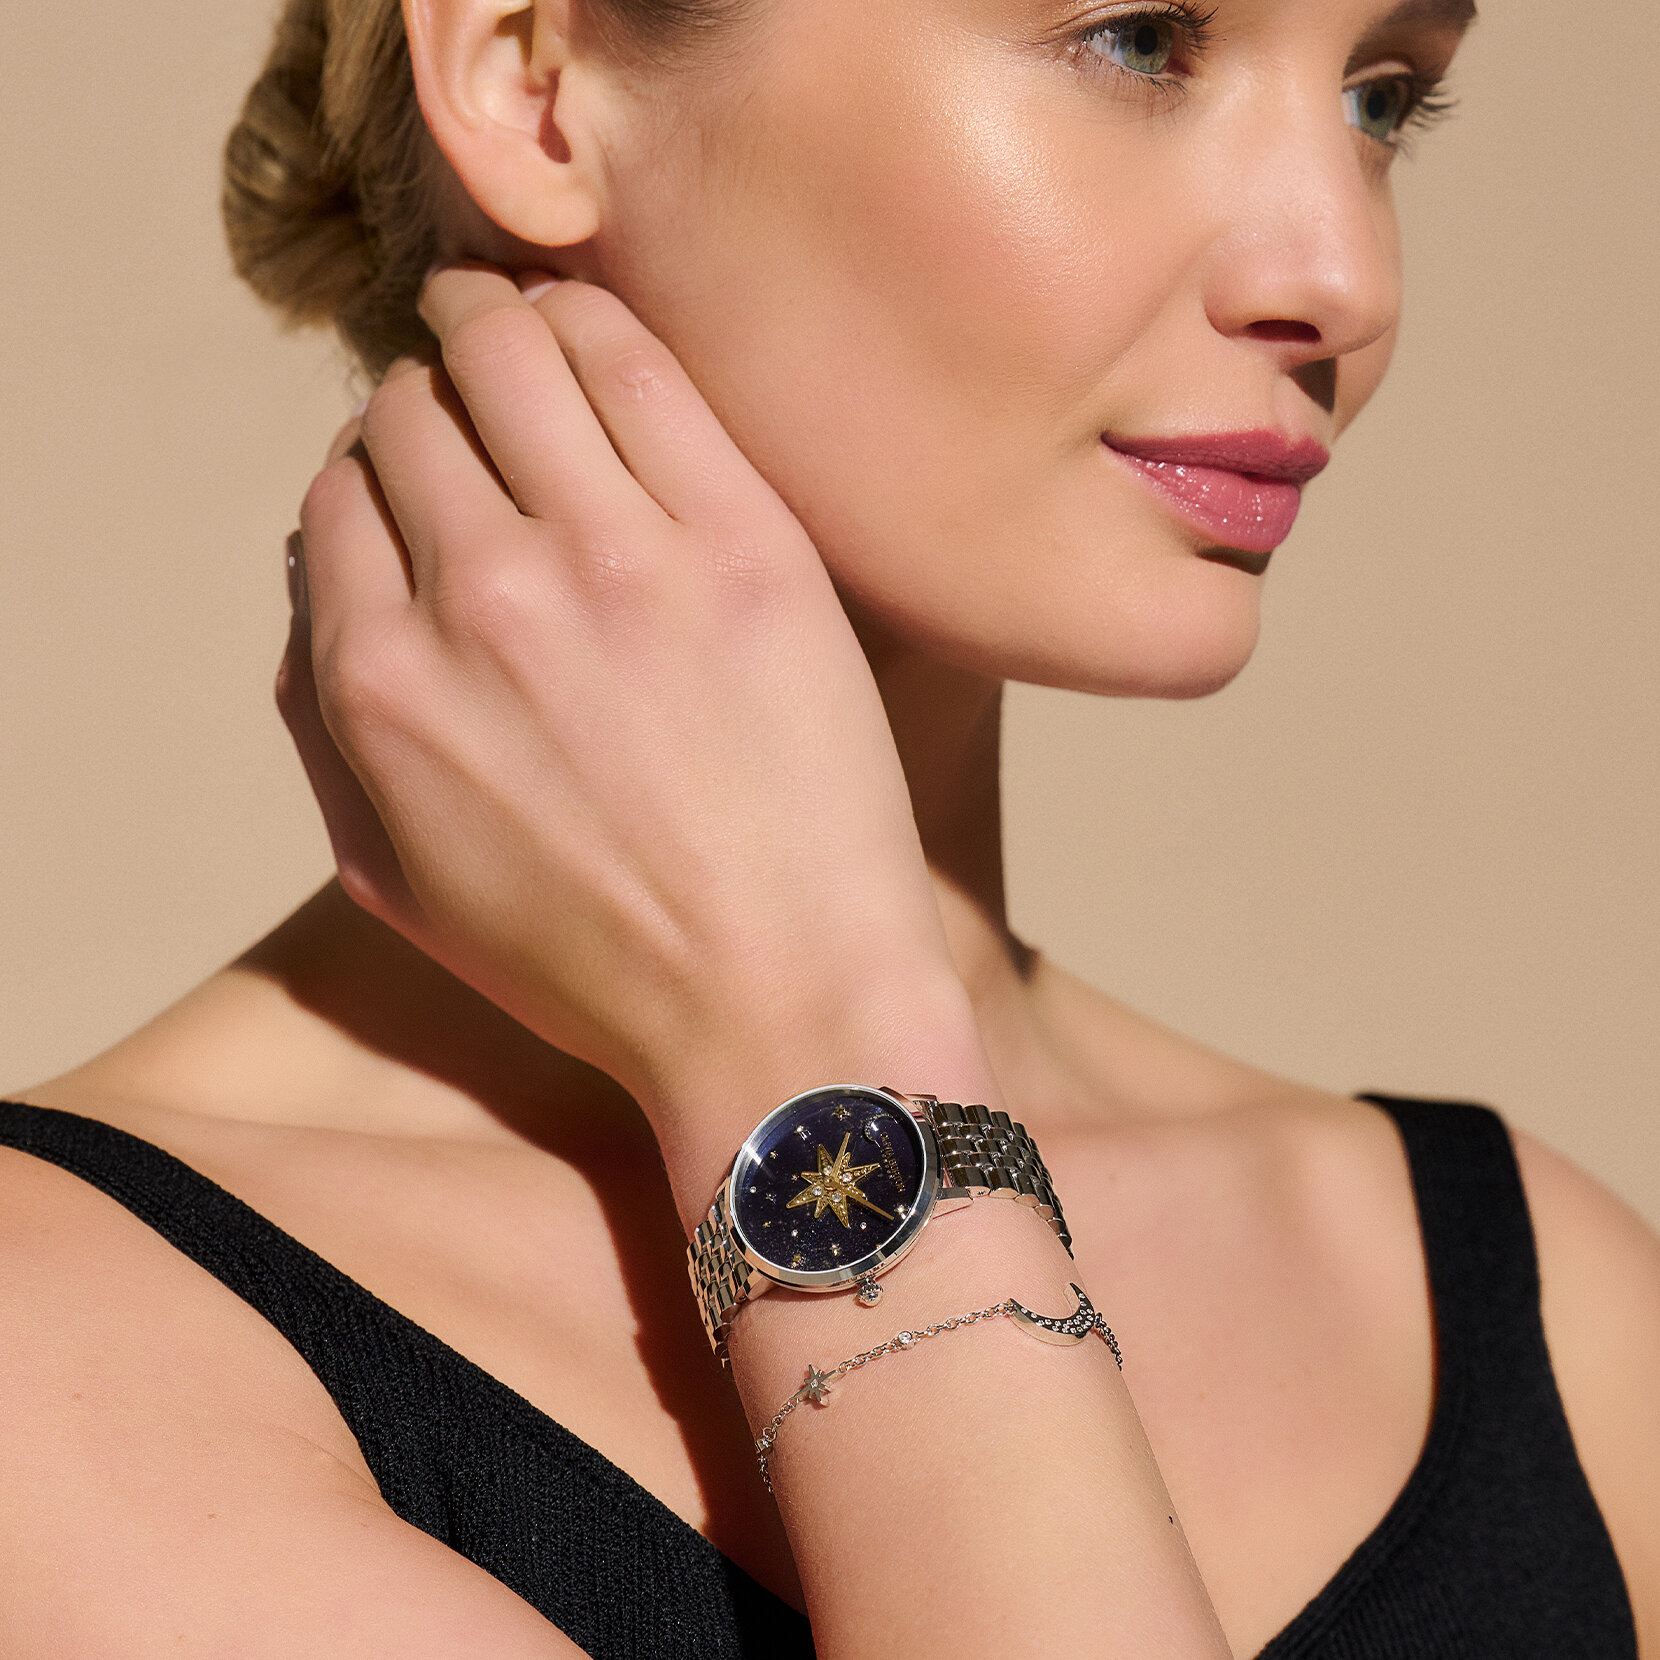 35mm Nova Slim Sapphire Blue & Silver Bracelet Watch